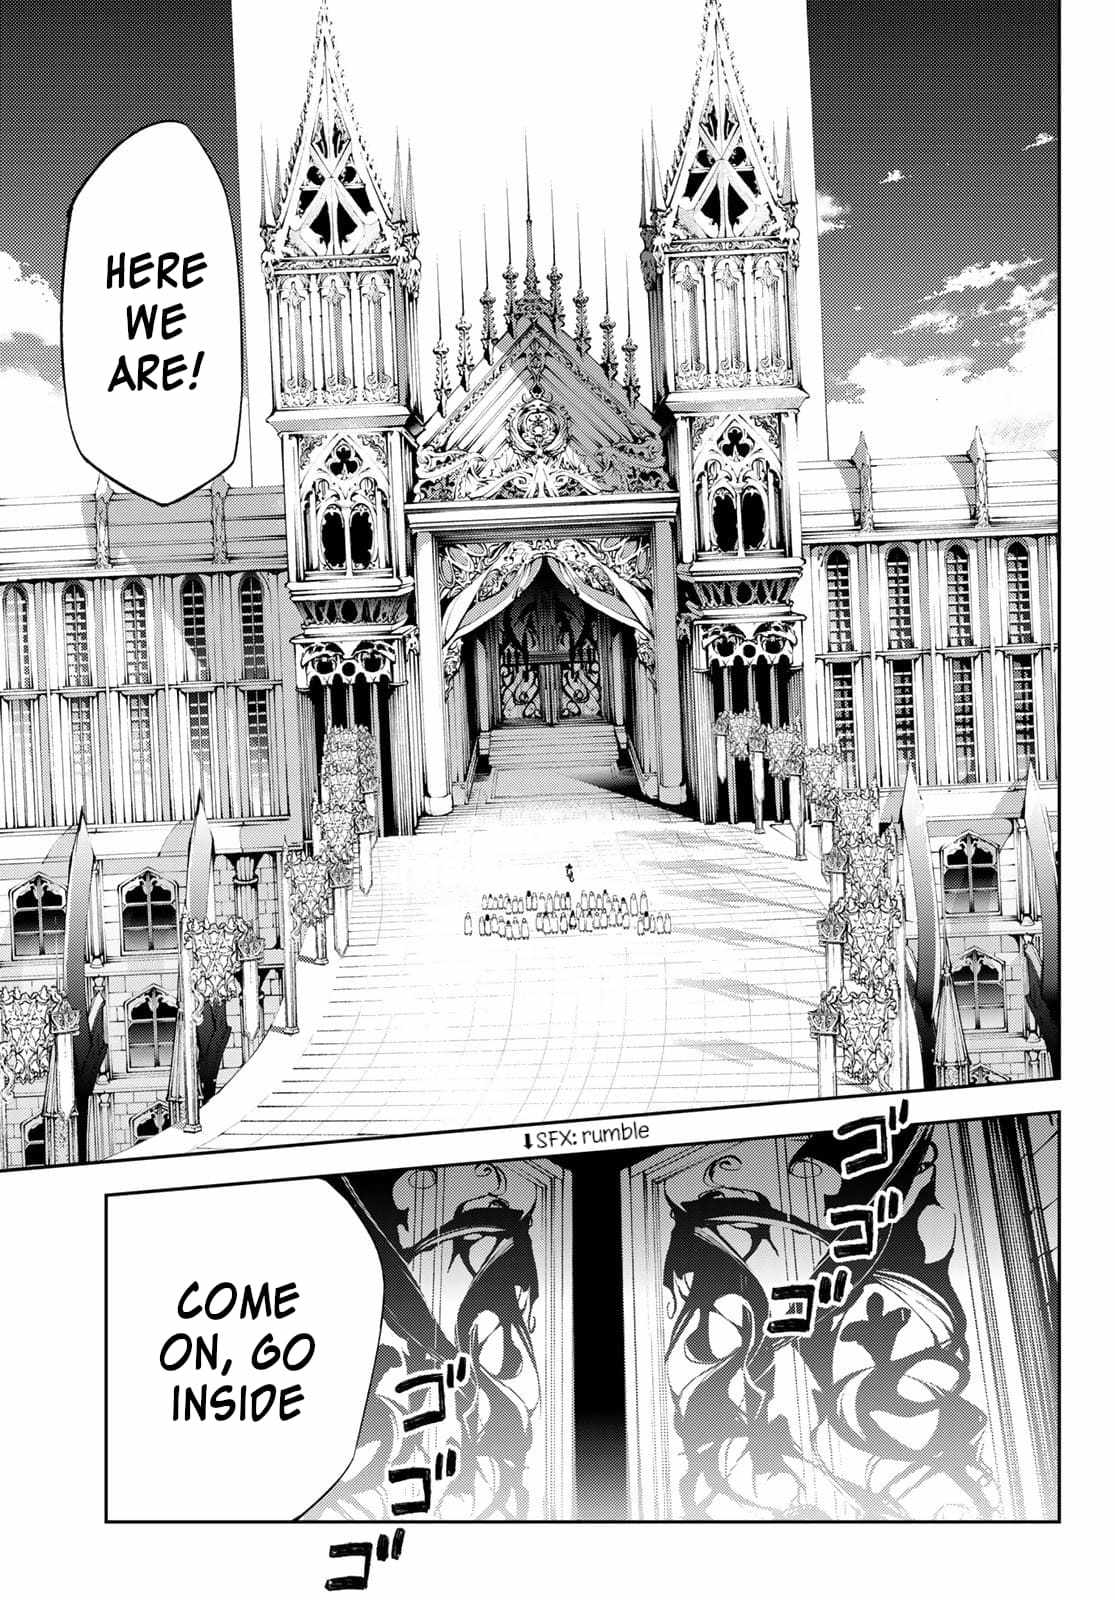 Manga: Wistoria's Wand and Sword Chapter - 31-eng-li